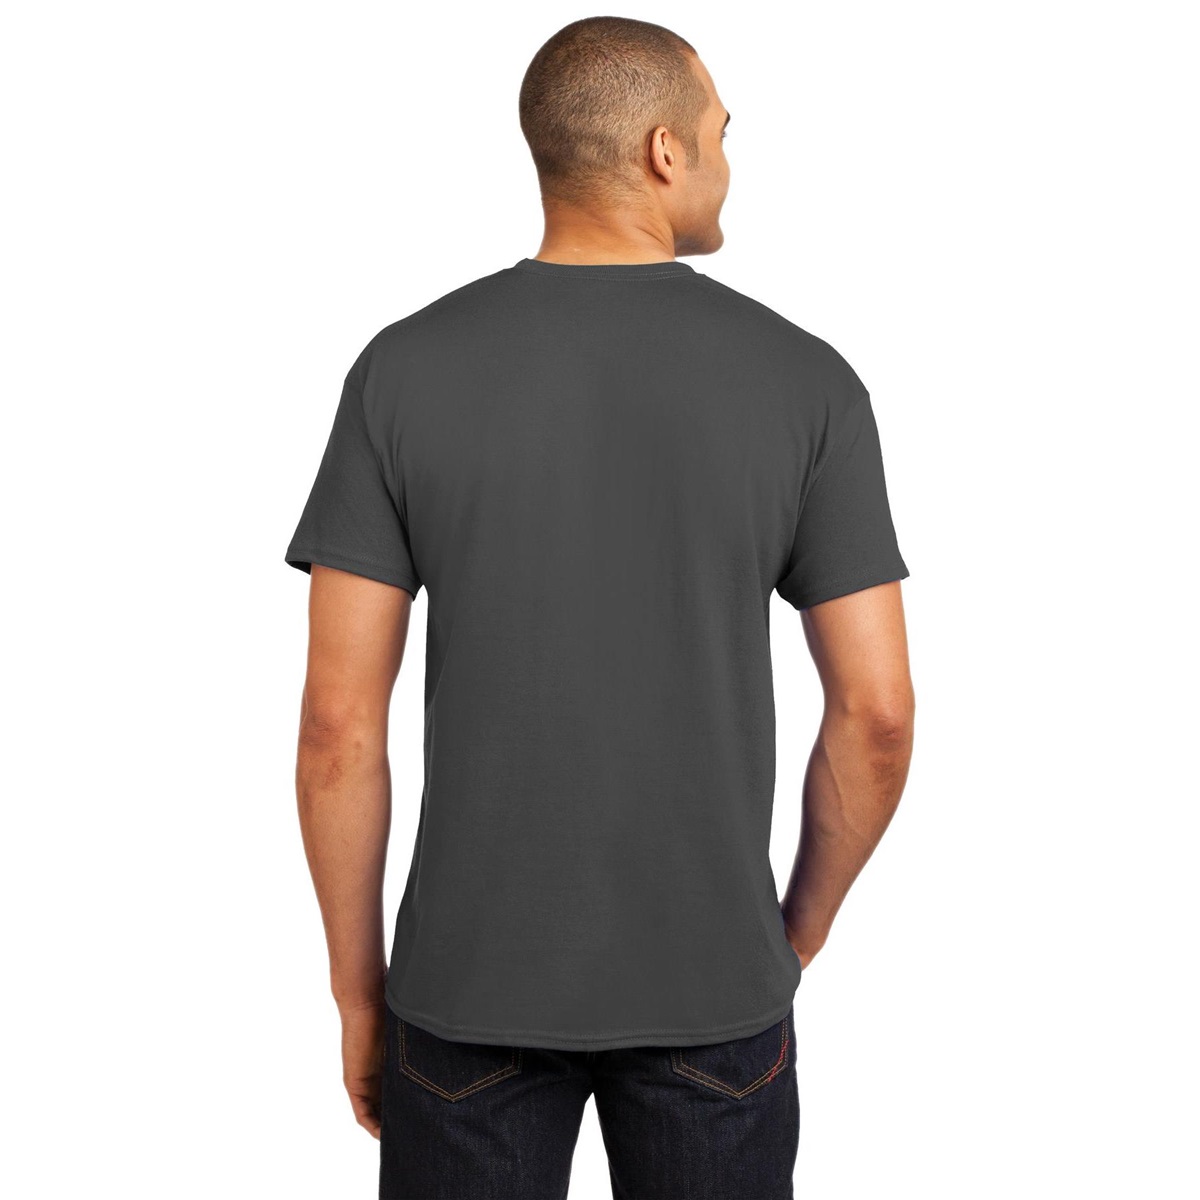 Hanes 5170 ComfortBlend EcoSmart Cotton/Polyester T-Shirt - Smoke Grey ...